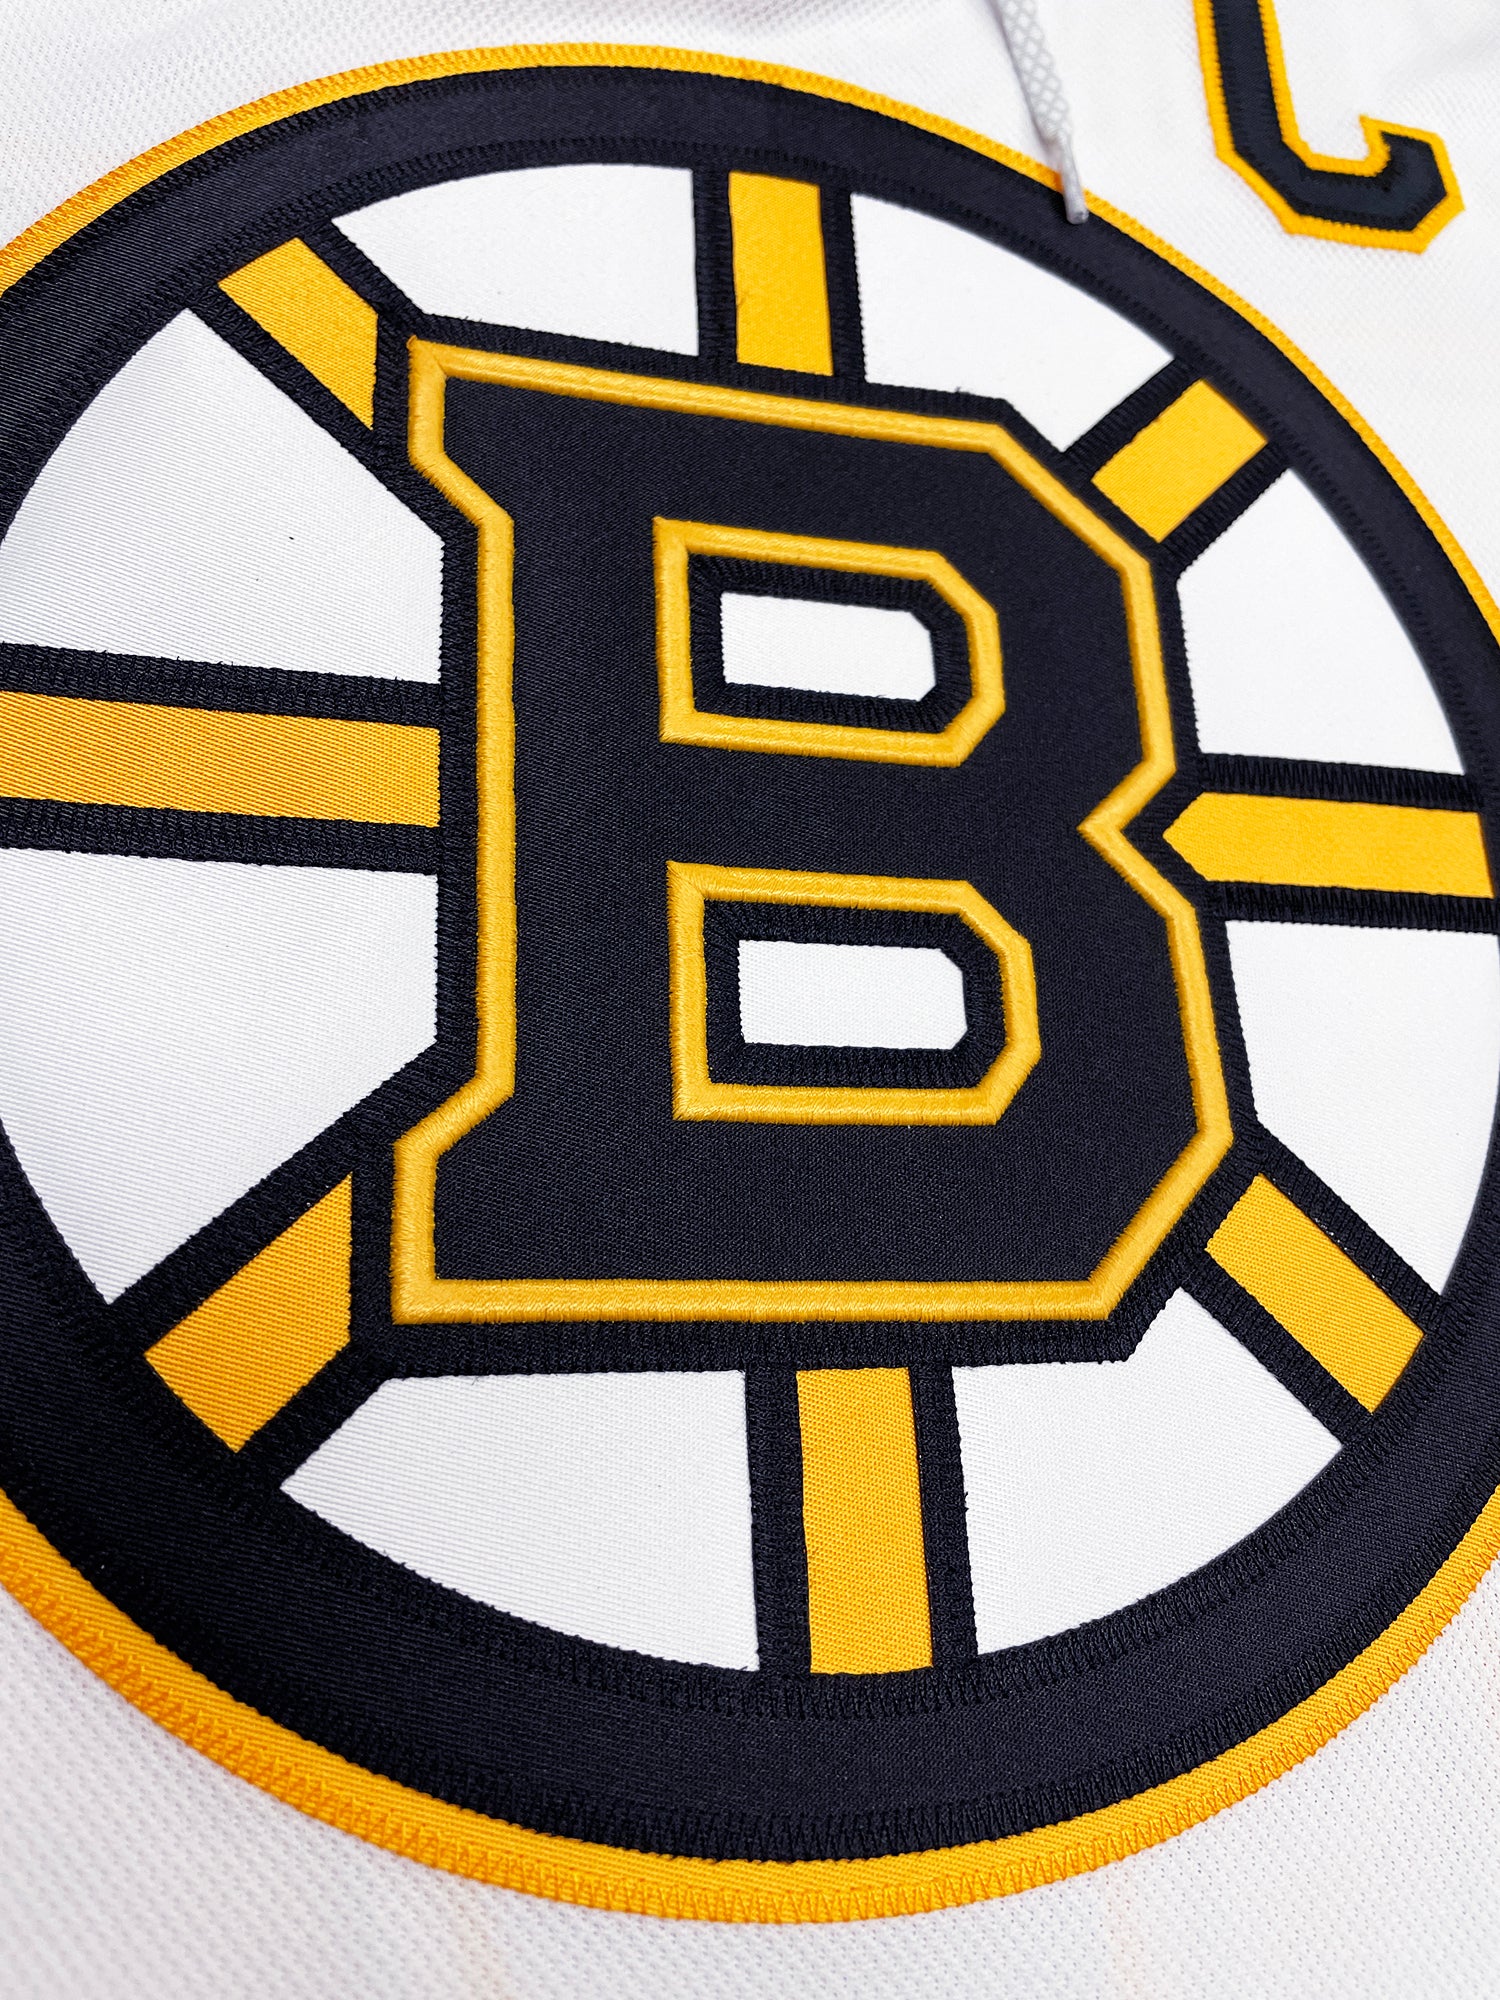 Brad Marchand Boston Bruins adidas Primegreen Authentic Pro